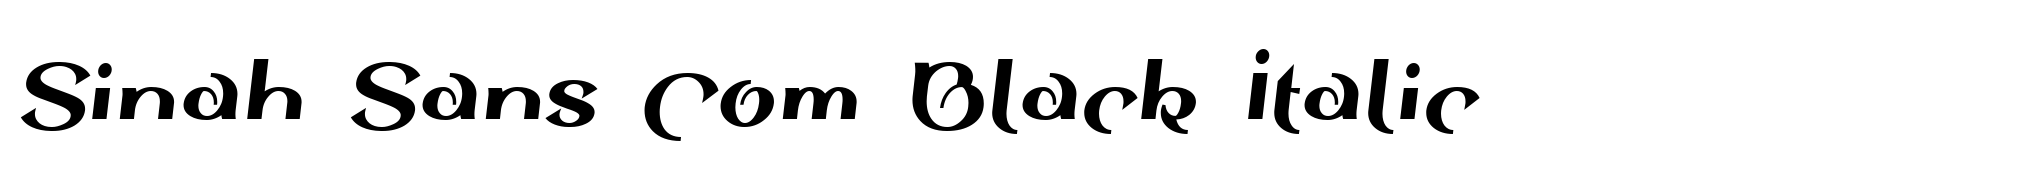 Sinah Sans Com Black Italic image